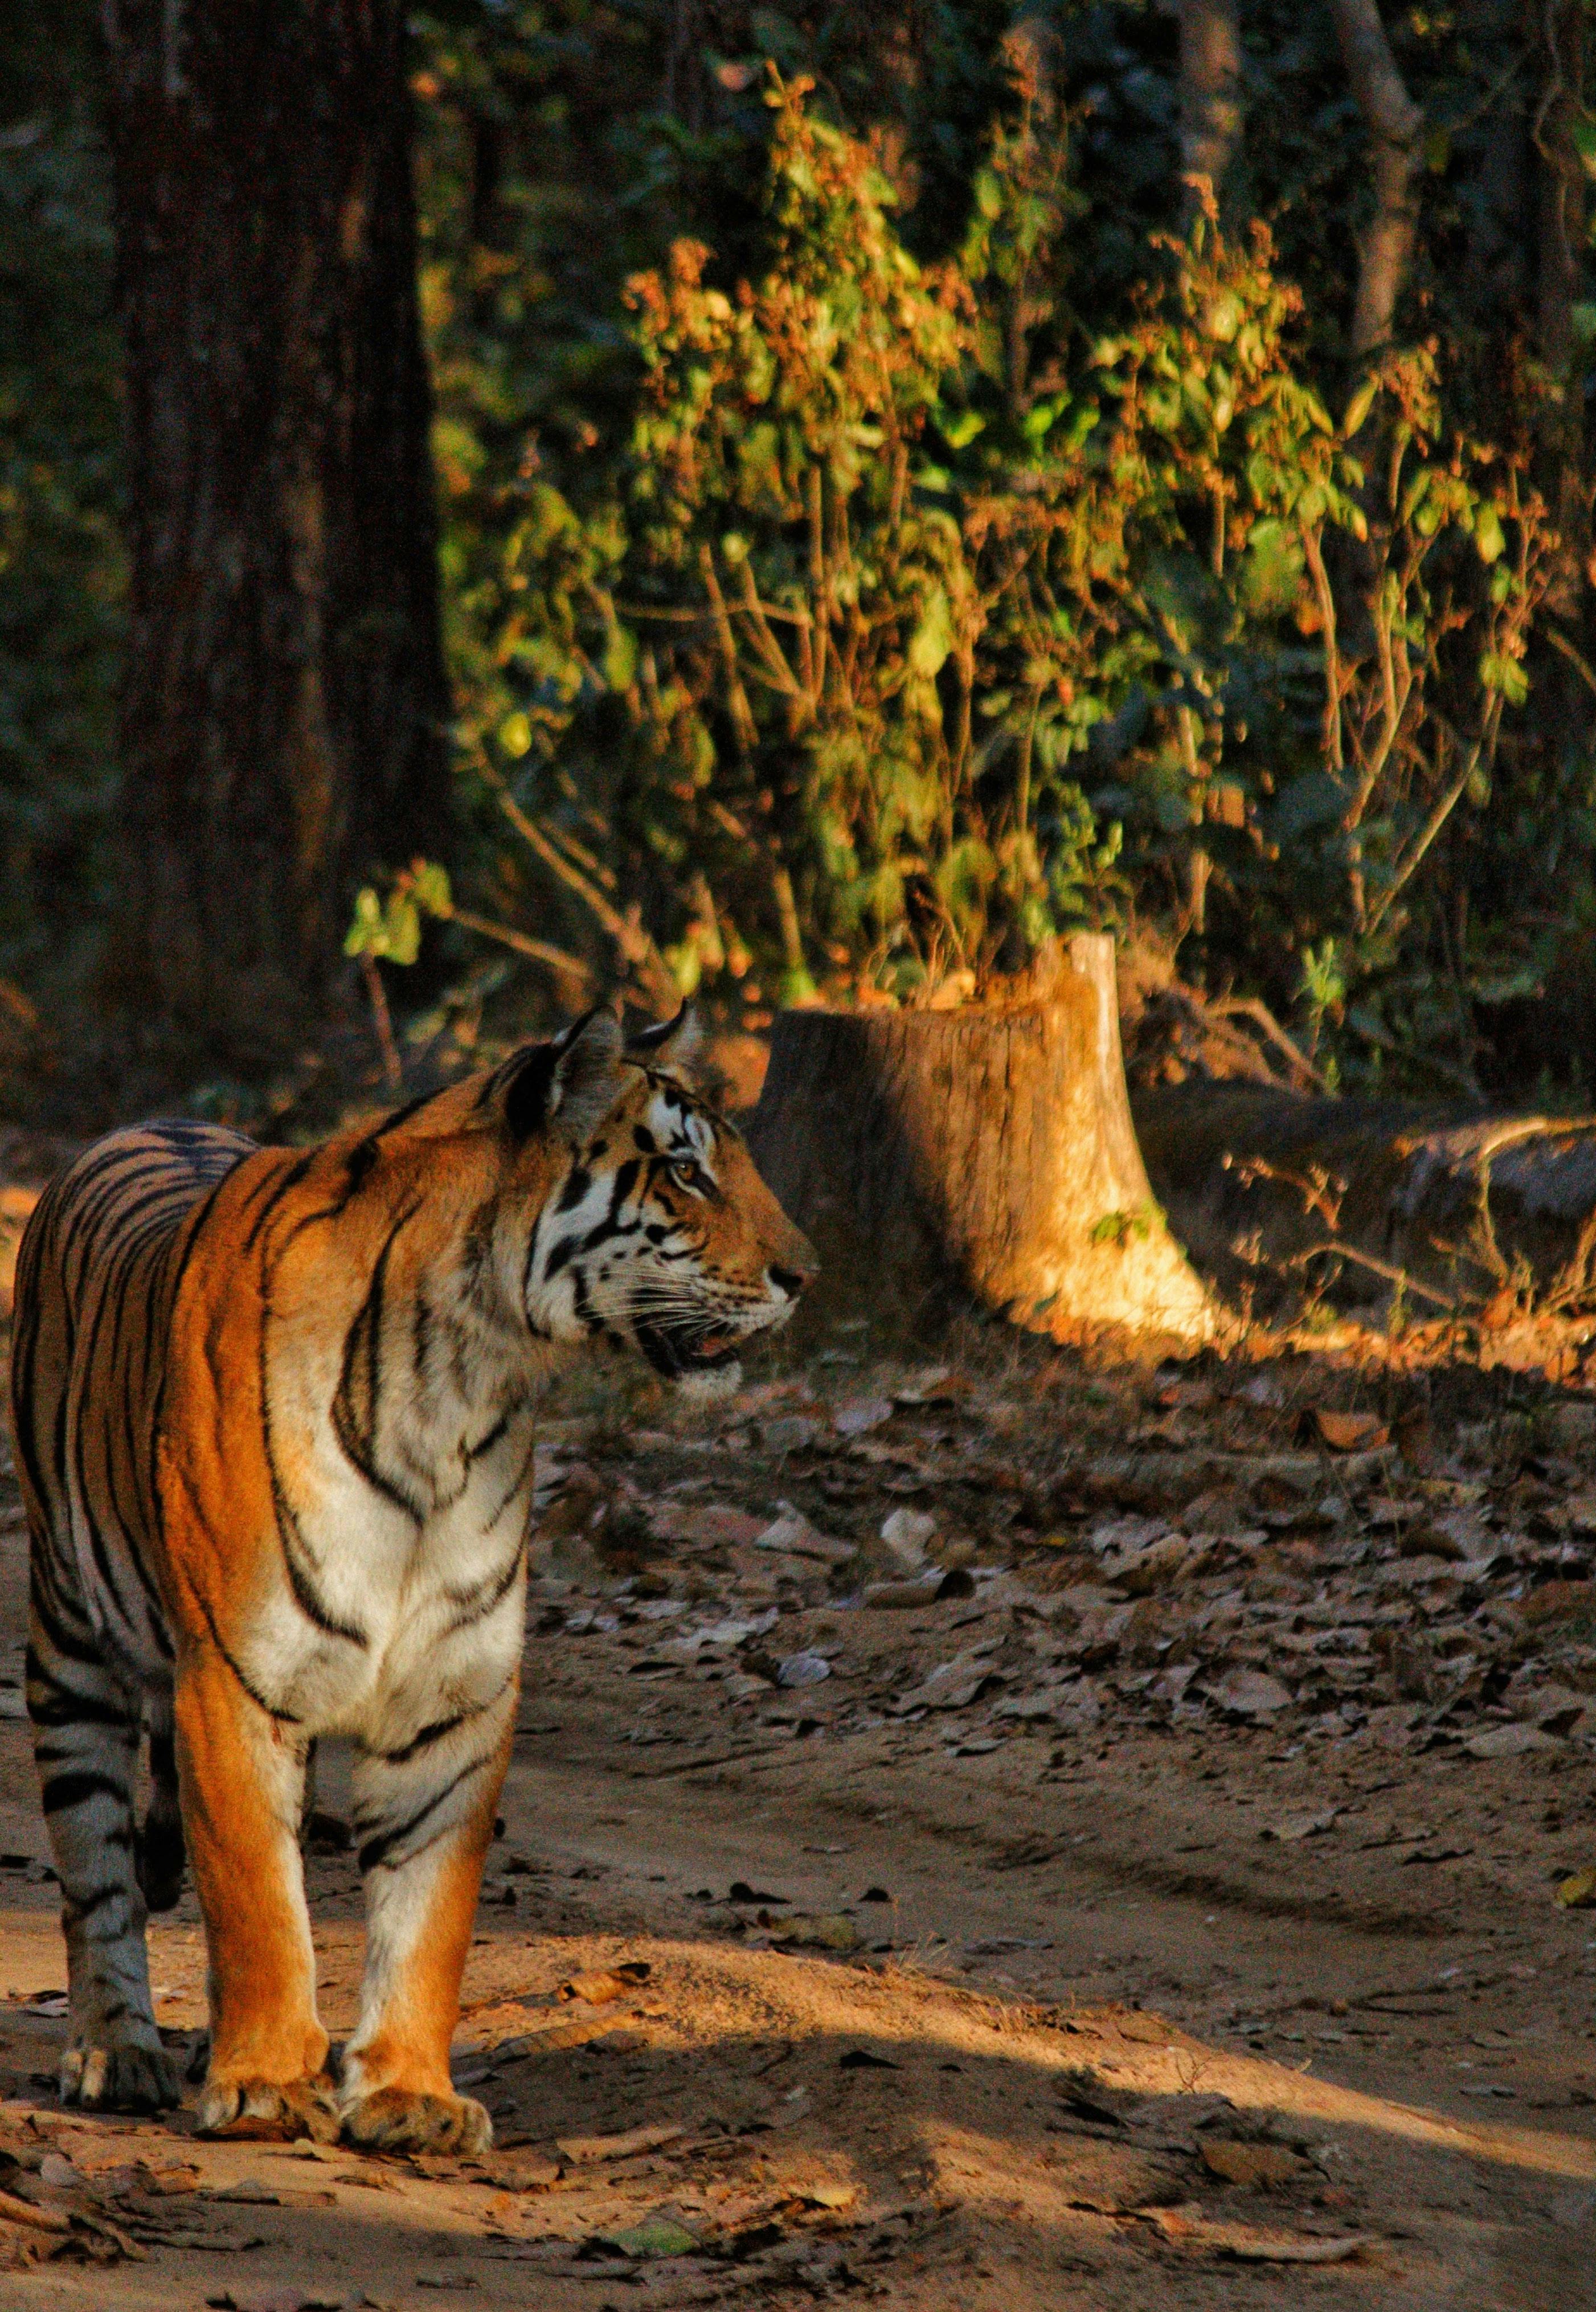 Close-Up Shot of a Tiger · Free Stock Photo